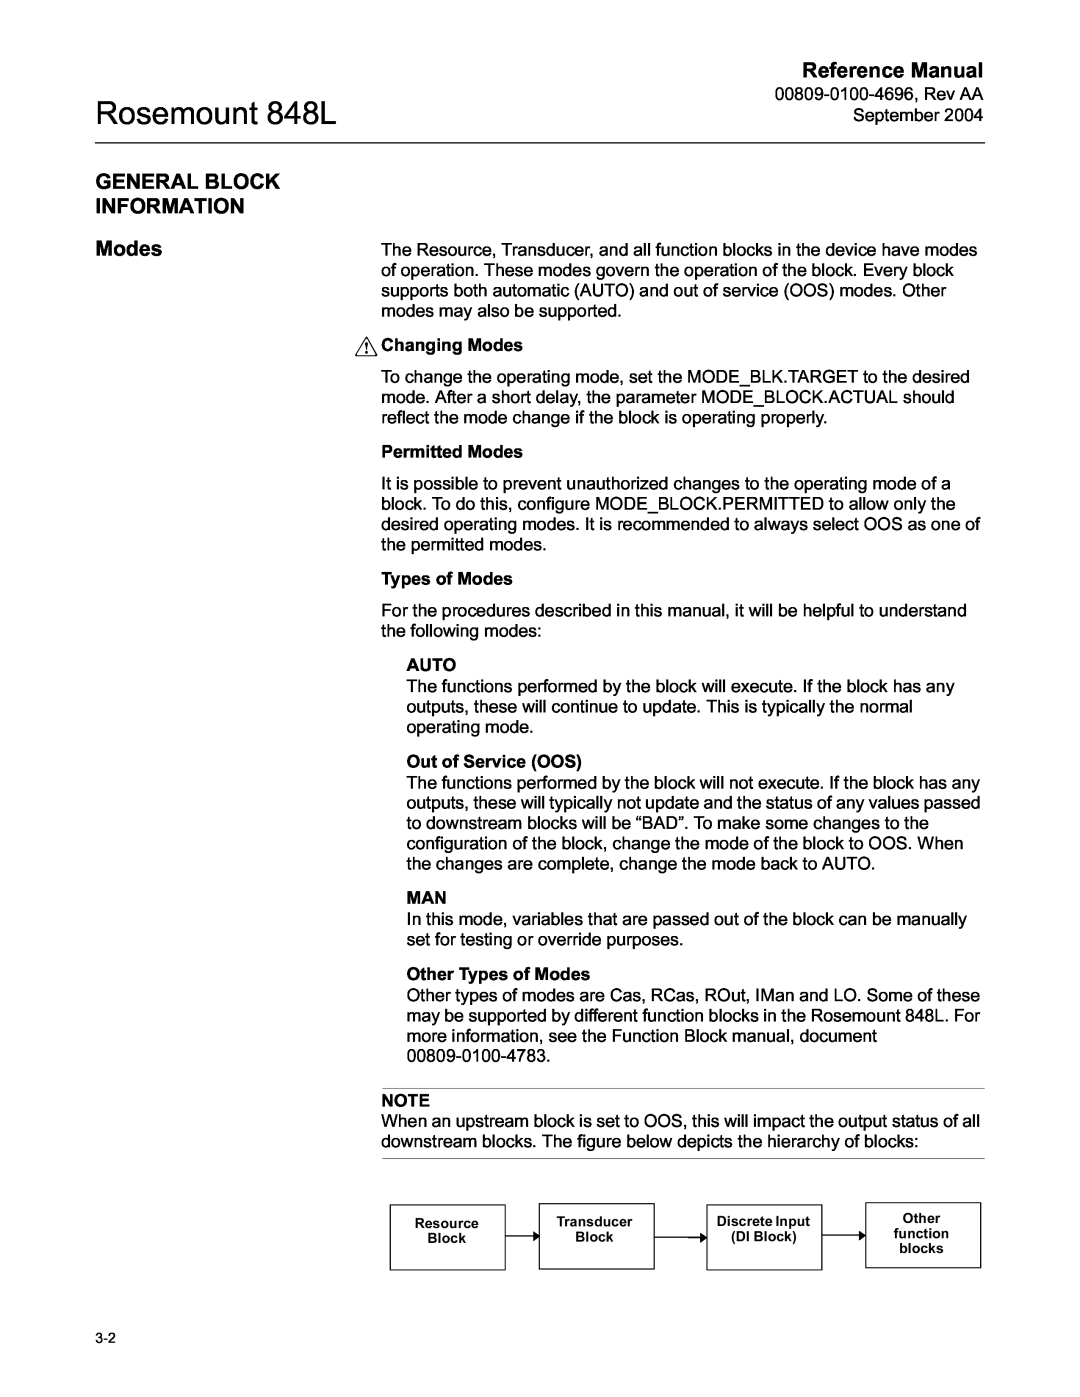 Emerson manual GENERAL BLOCK INFORMATION Modes, Rosemount 848L, Reference Manual 